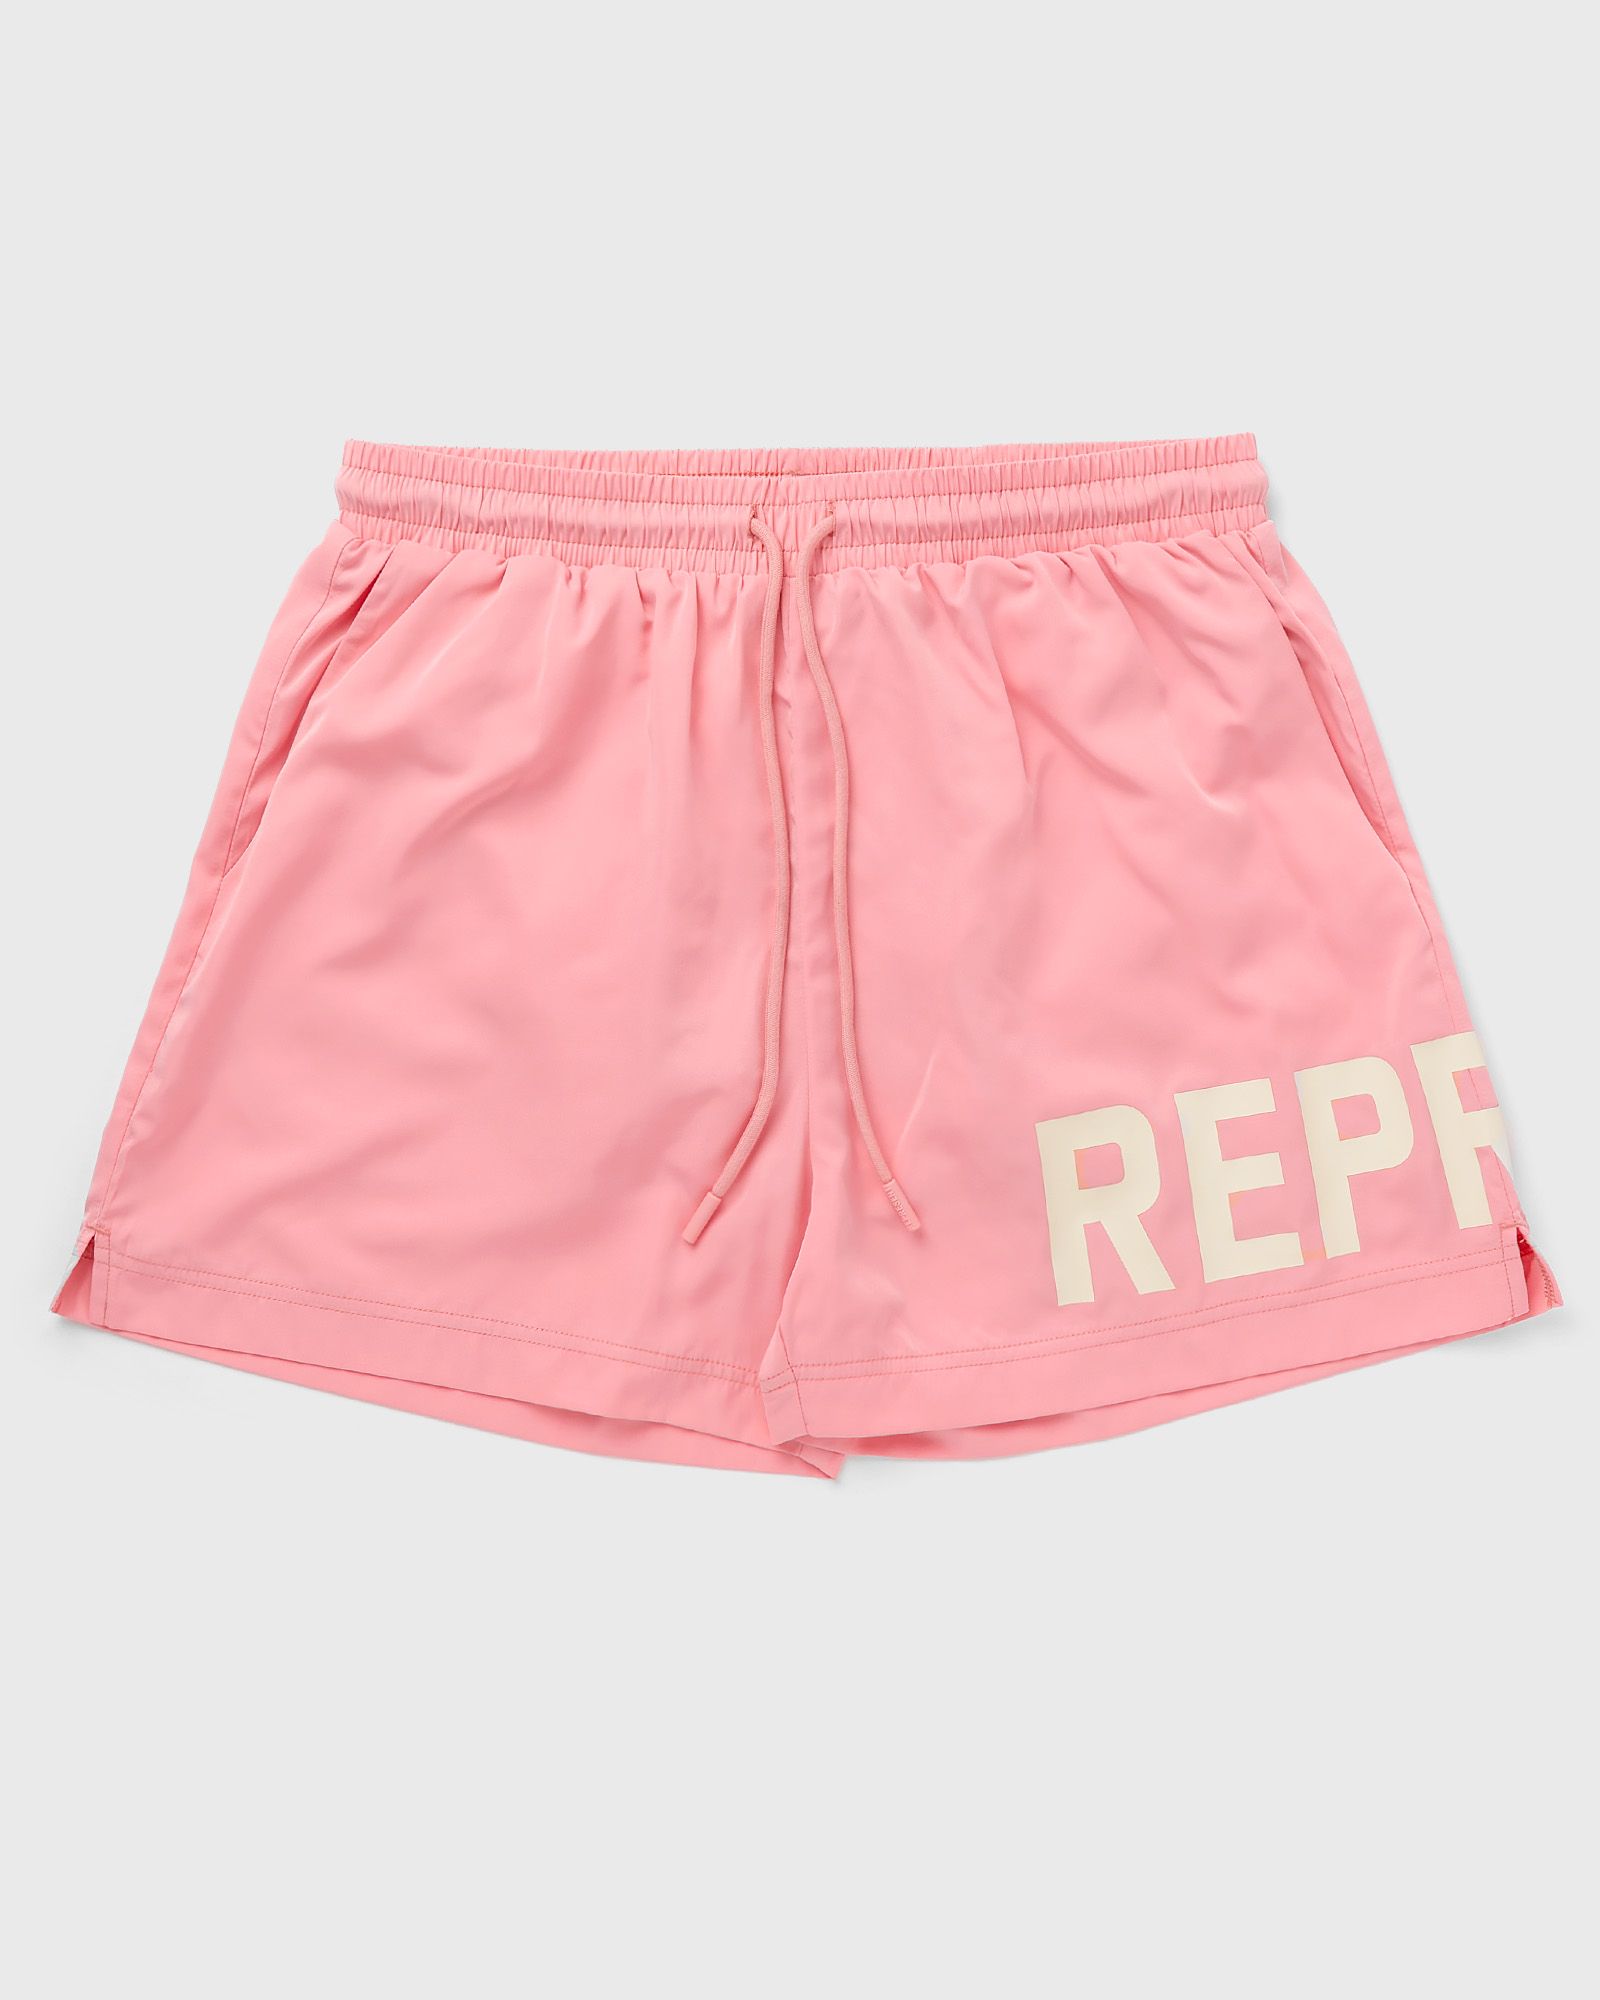 Represent - swim shorts men swimwear pink in größe:m